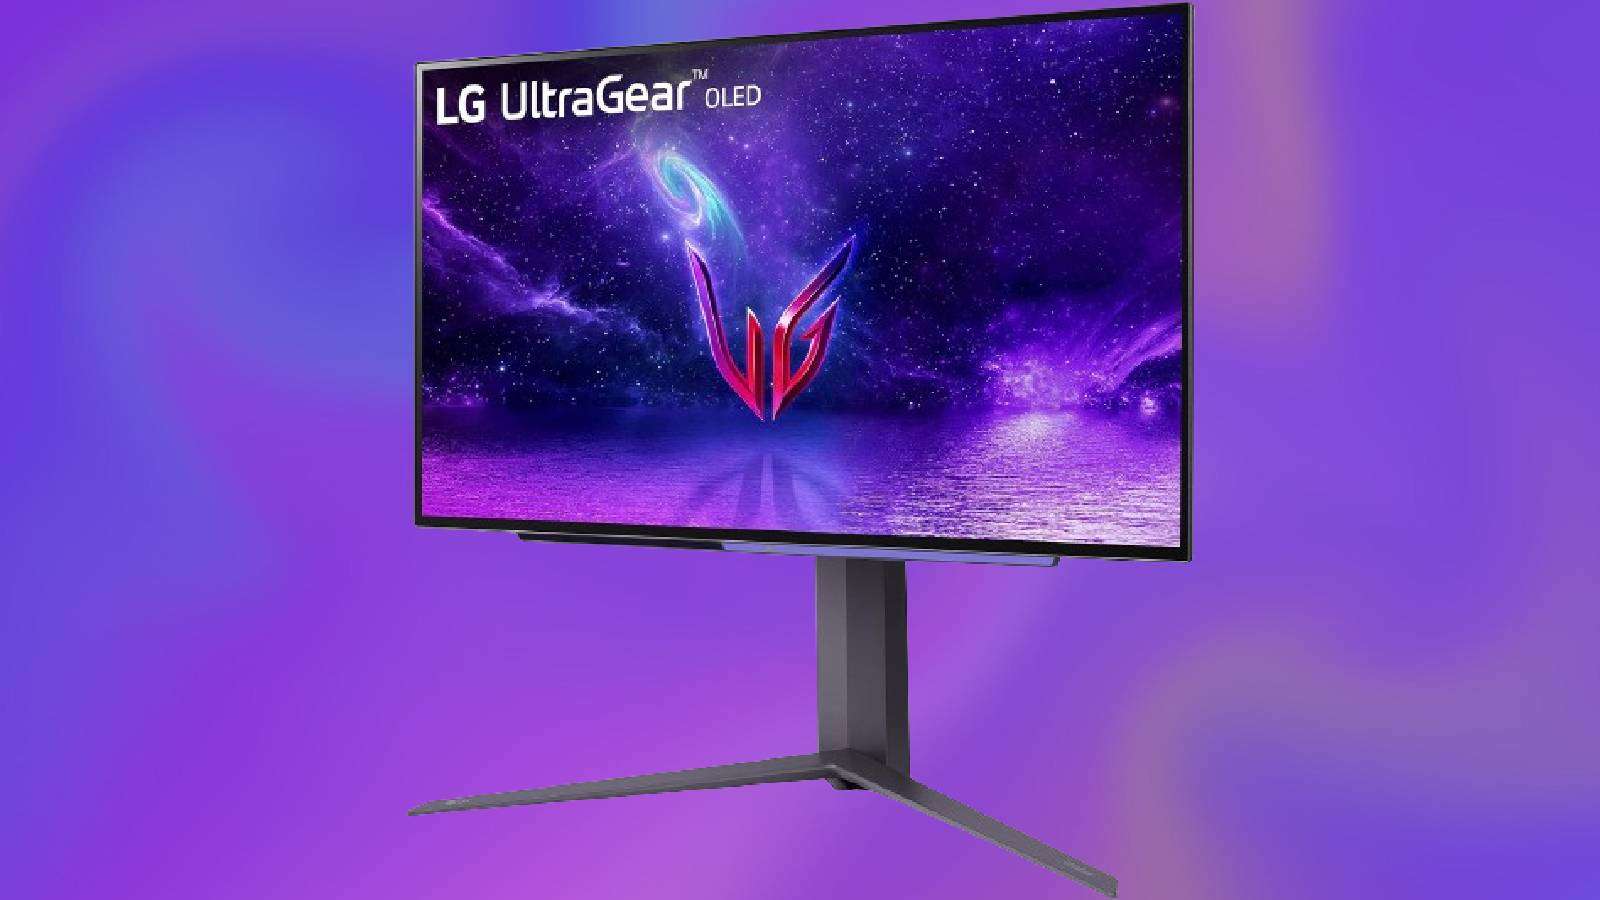 LG UltraGear OLED 27" gaming monitor